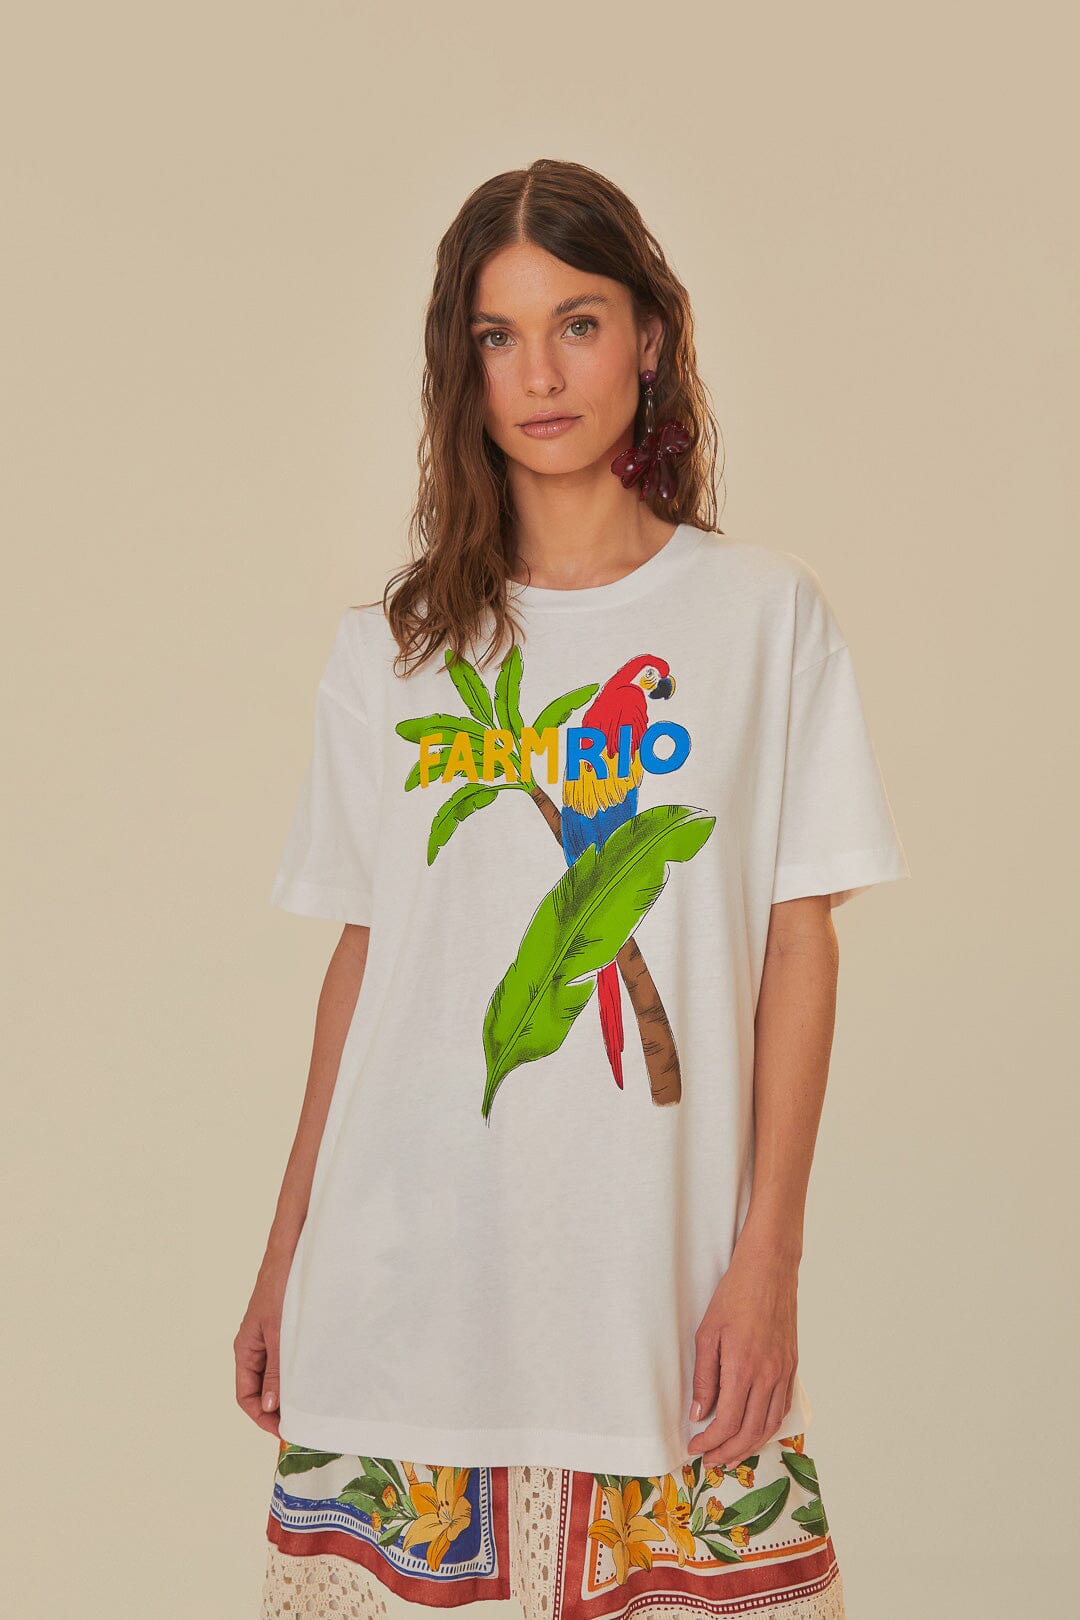 White Farm Rio Organic Cotton T-Shirt